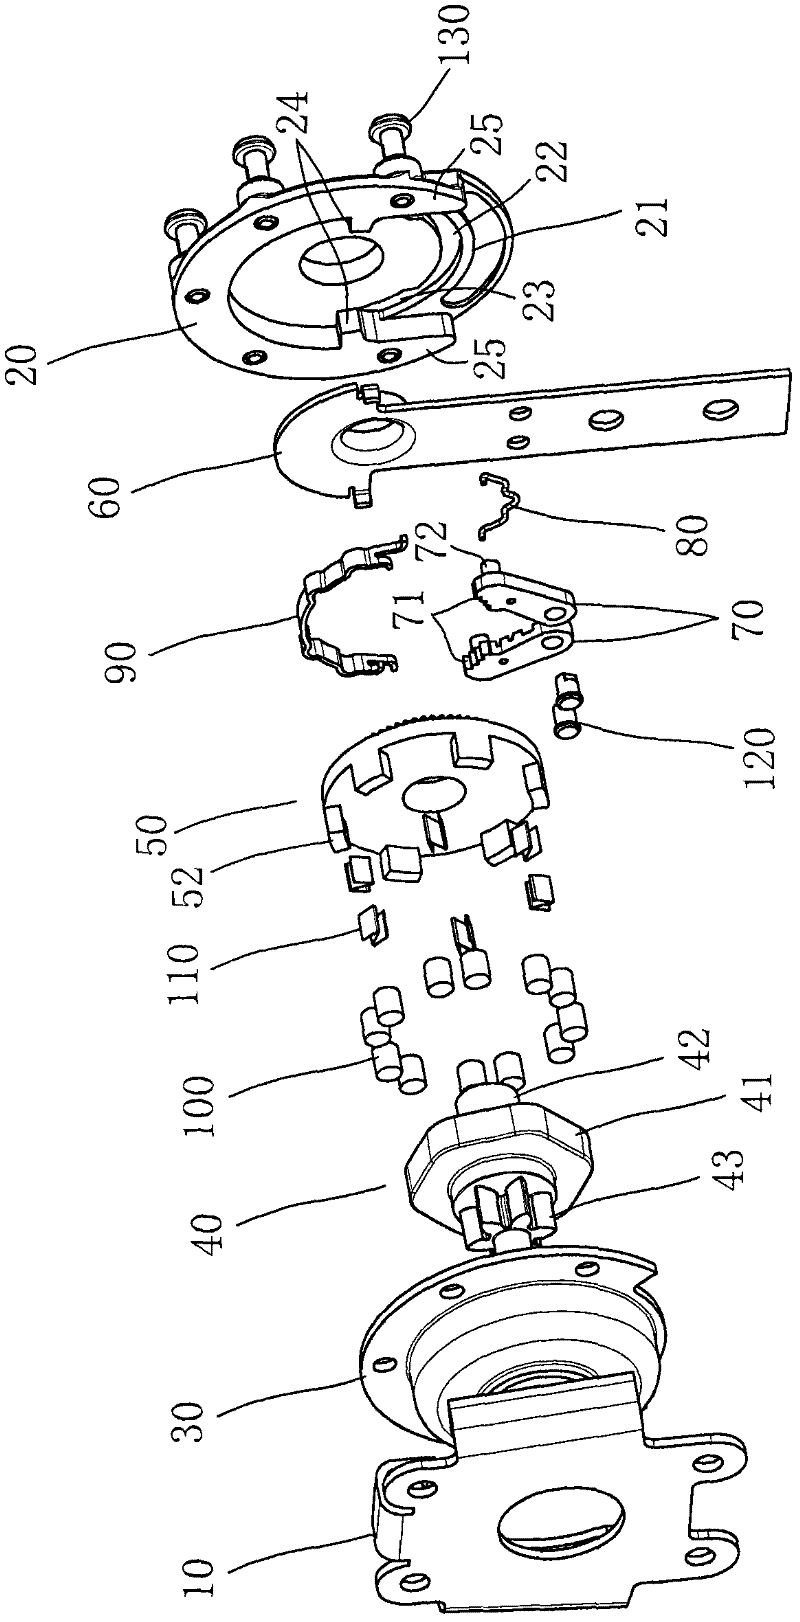 Automobile seat heightening pump